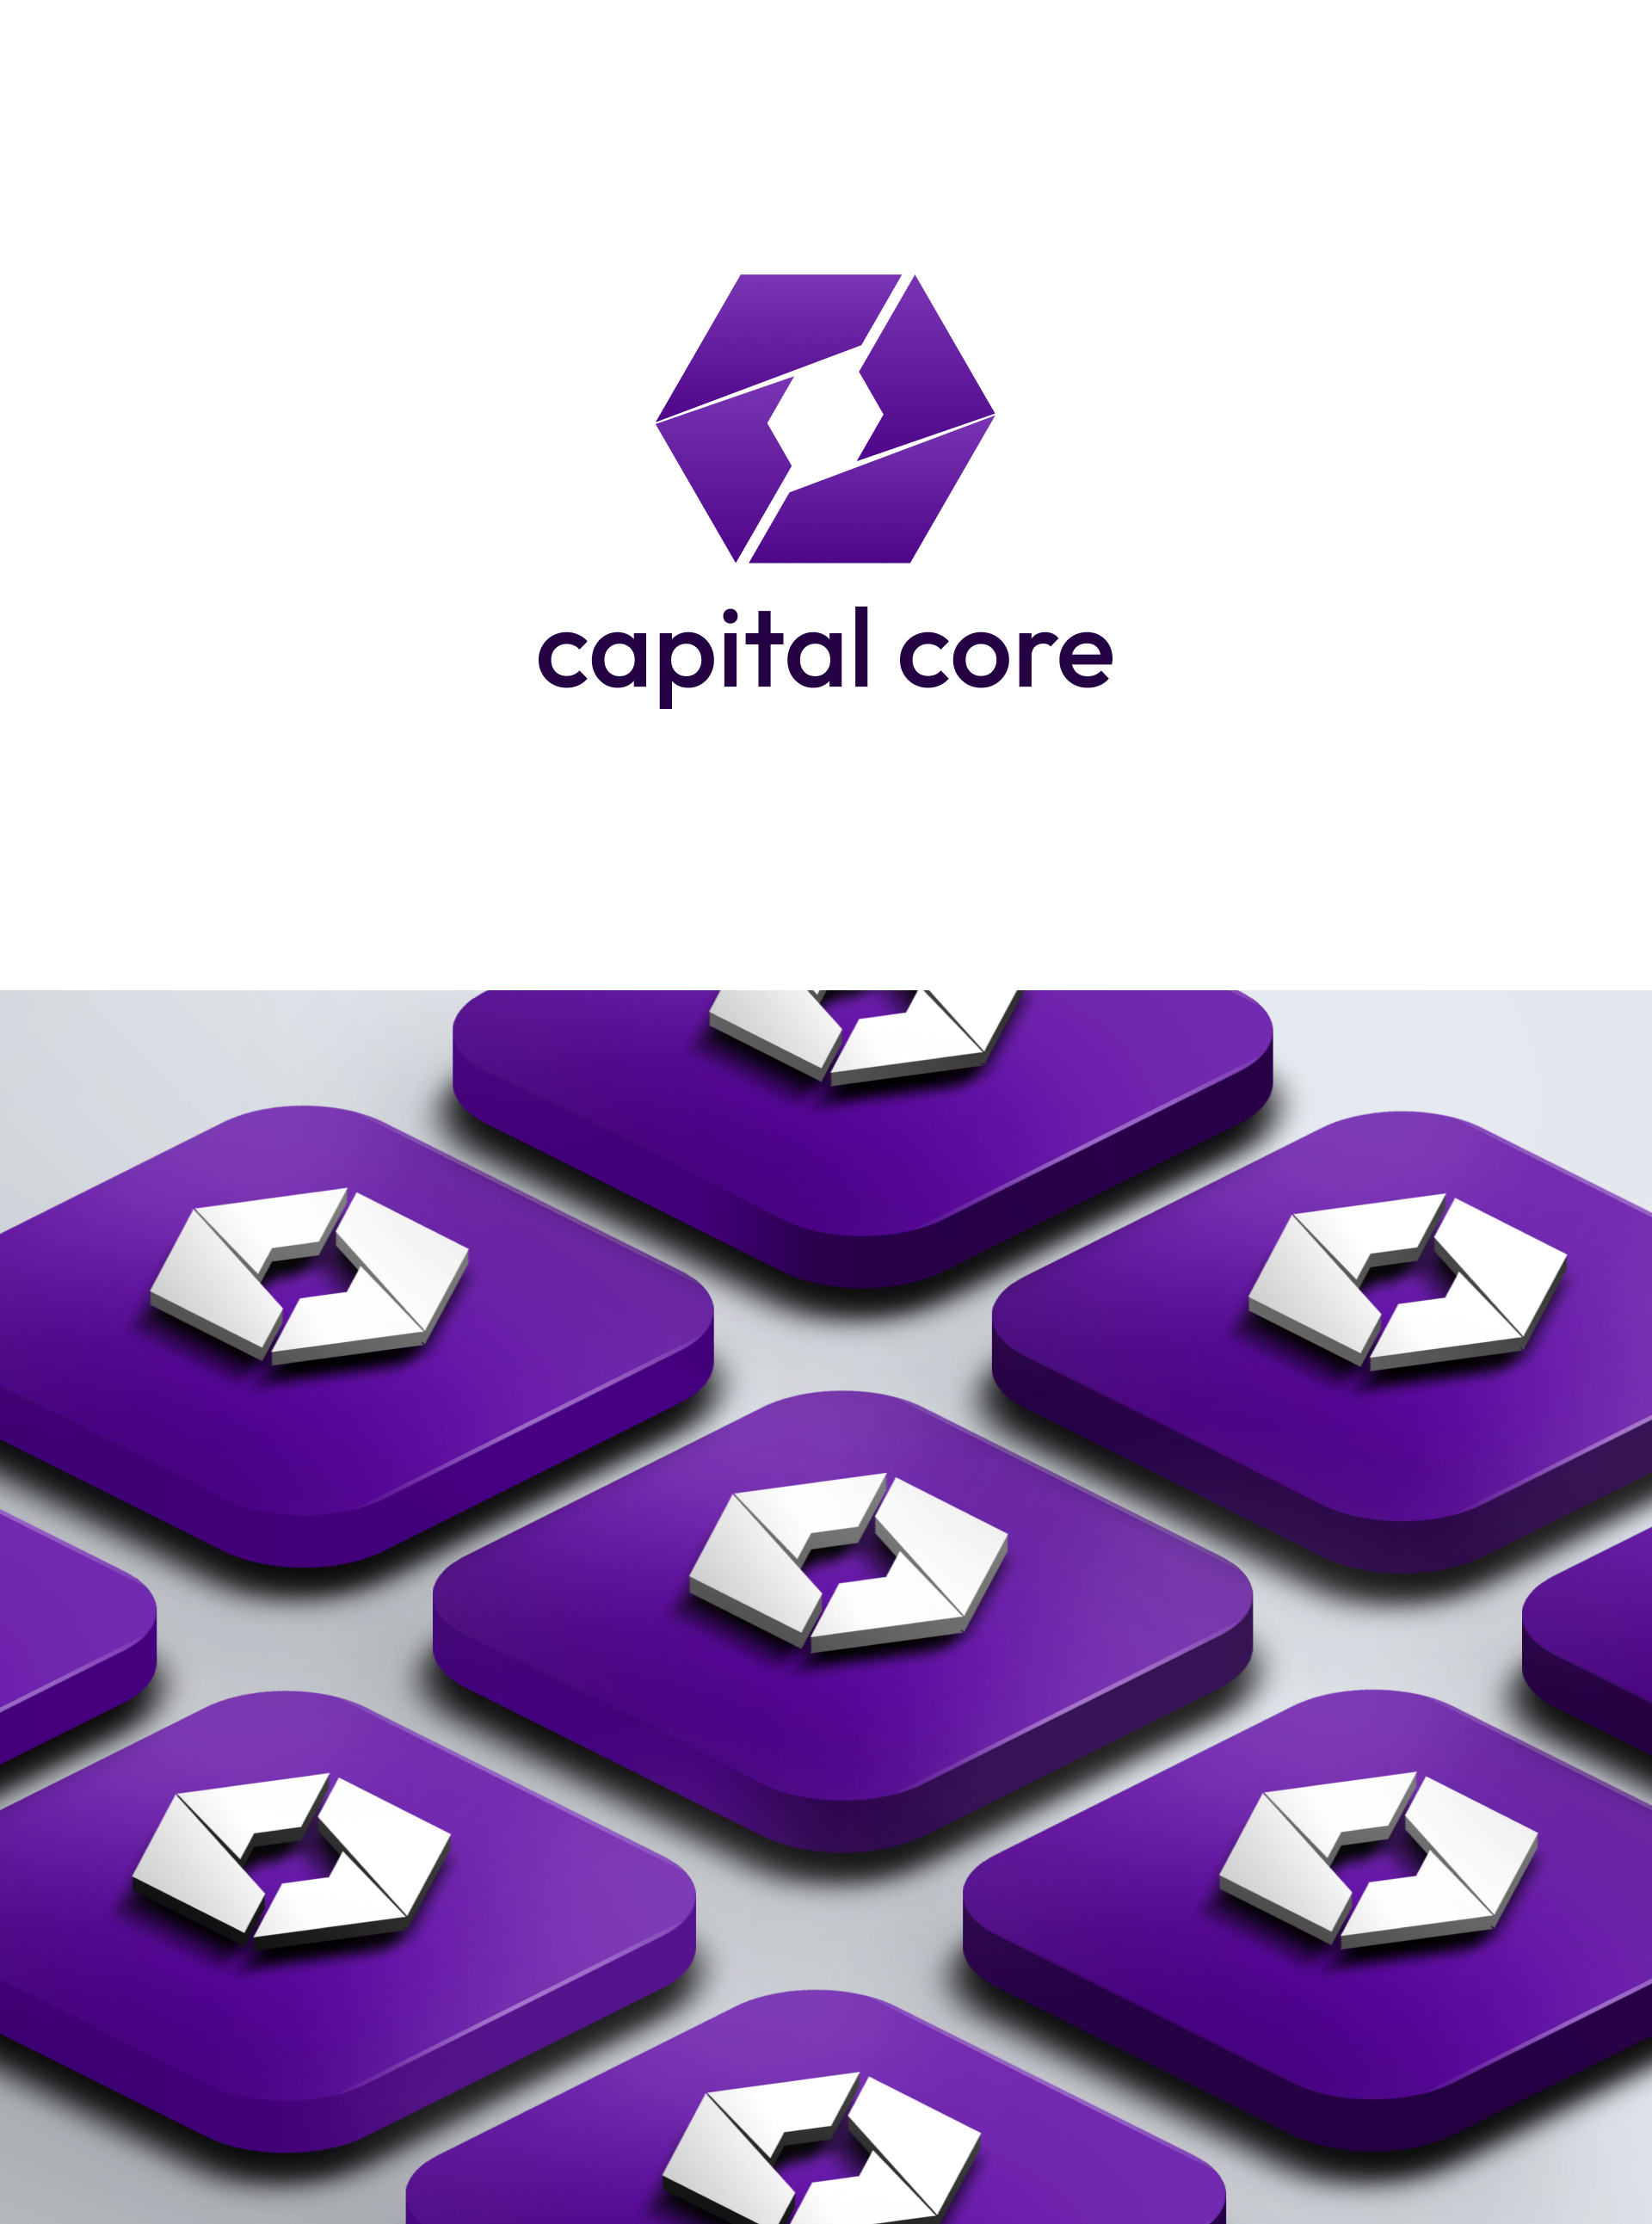 Capital Core Finance logo design by Design BakBak (Ankit) on Dribbble